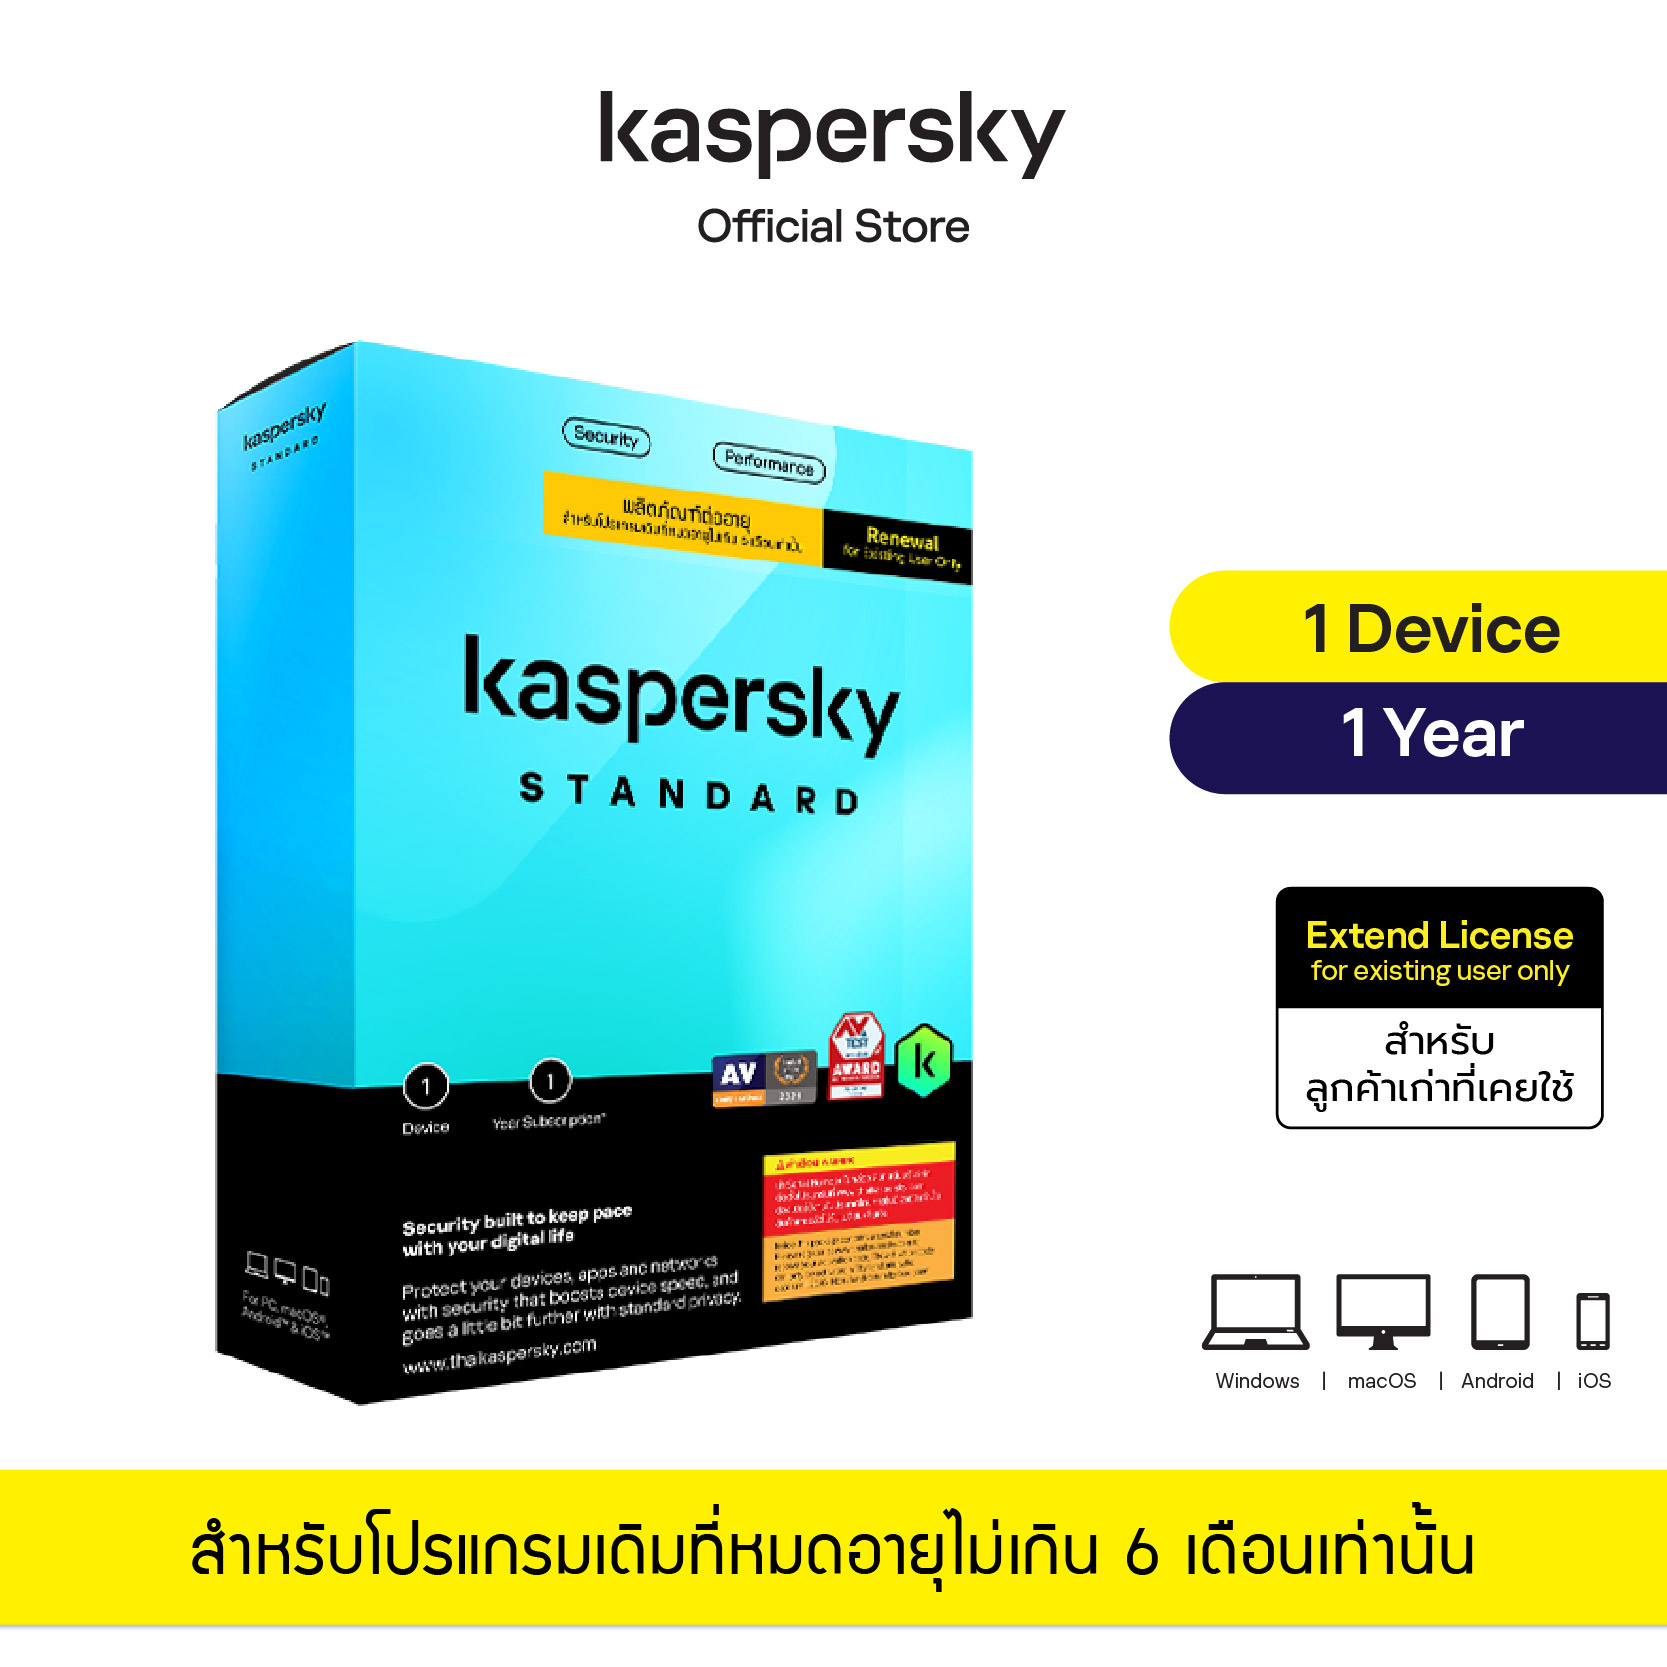 Kaspersky Standard 1 Device 1 Year (Extend License)